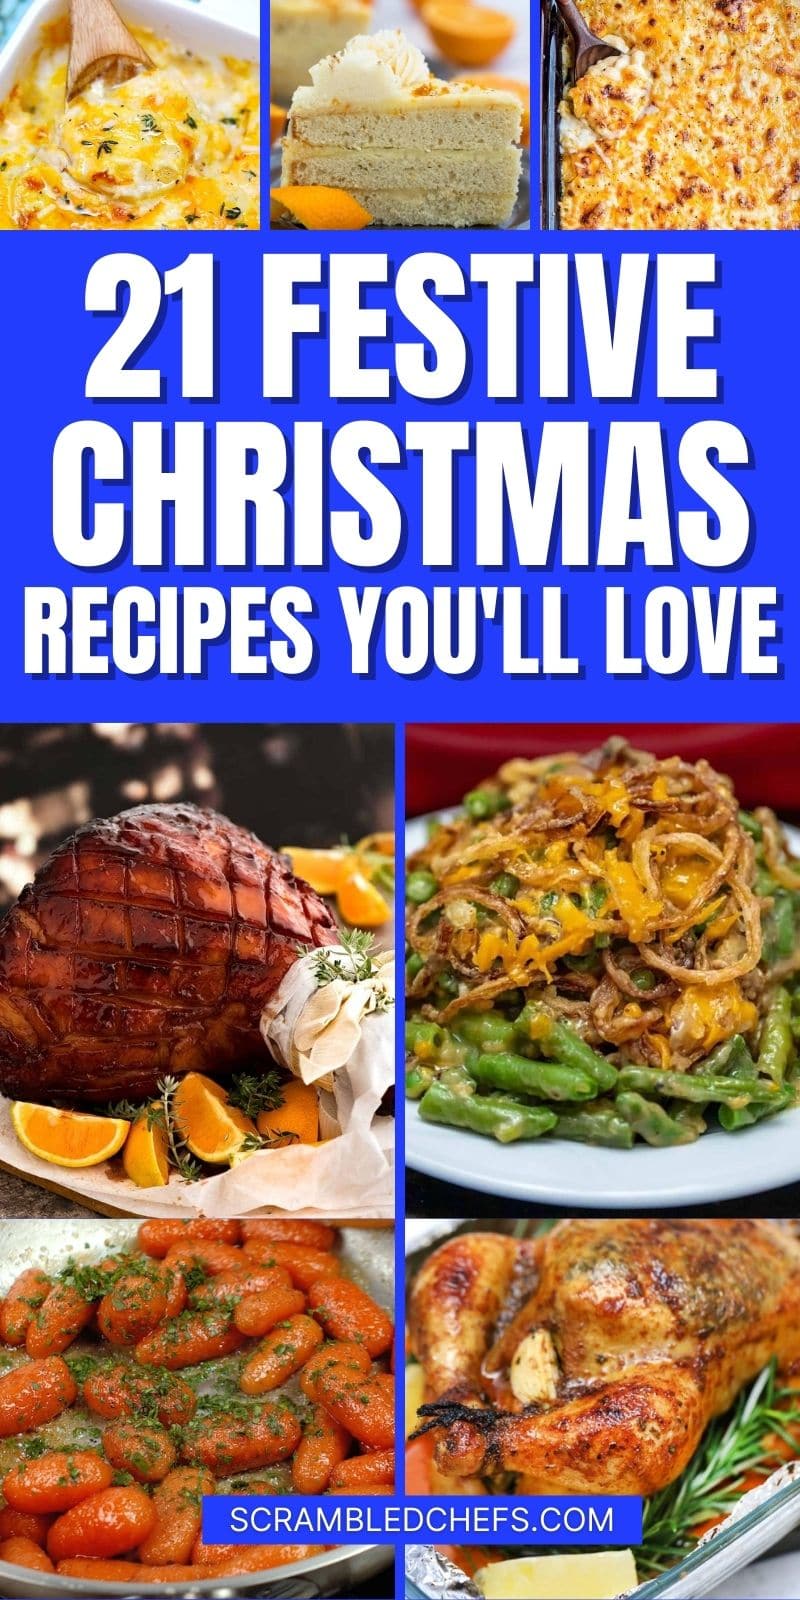 21 Christmas Recipes For a Festive Feast - Scrambled Chefs